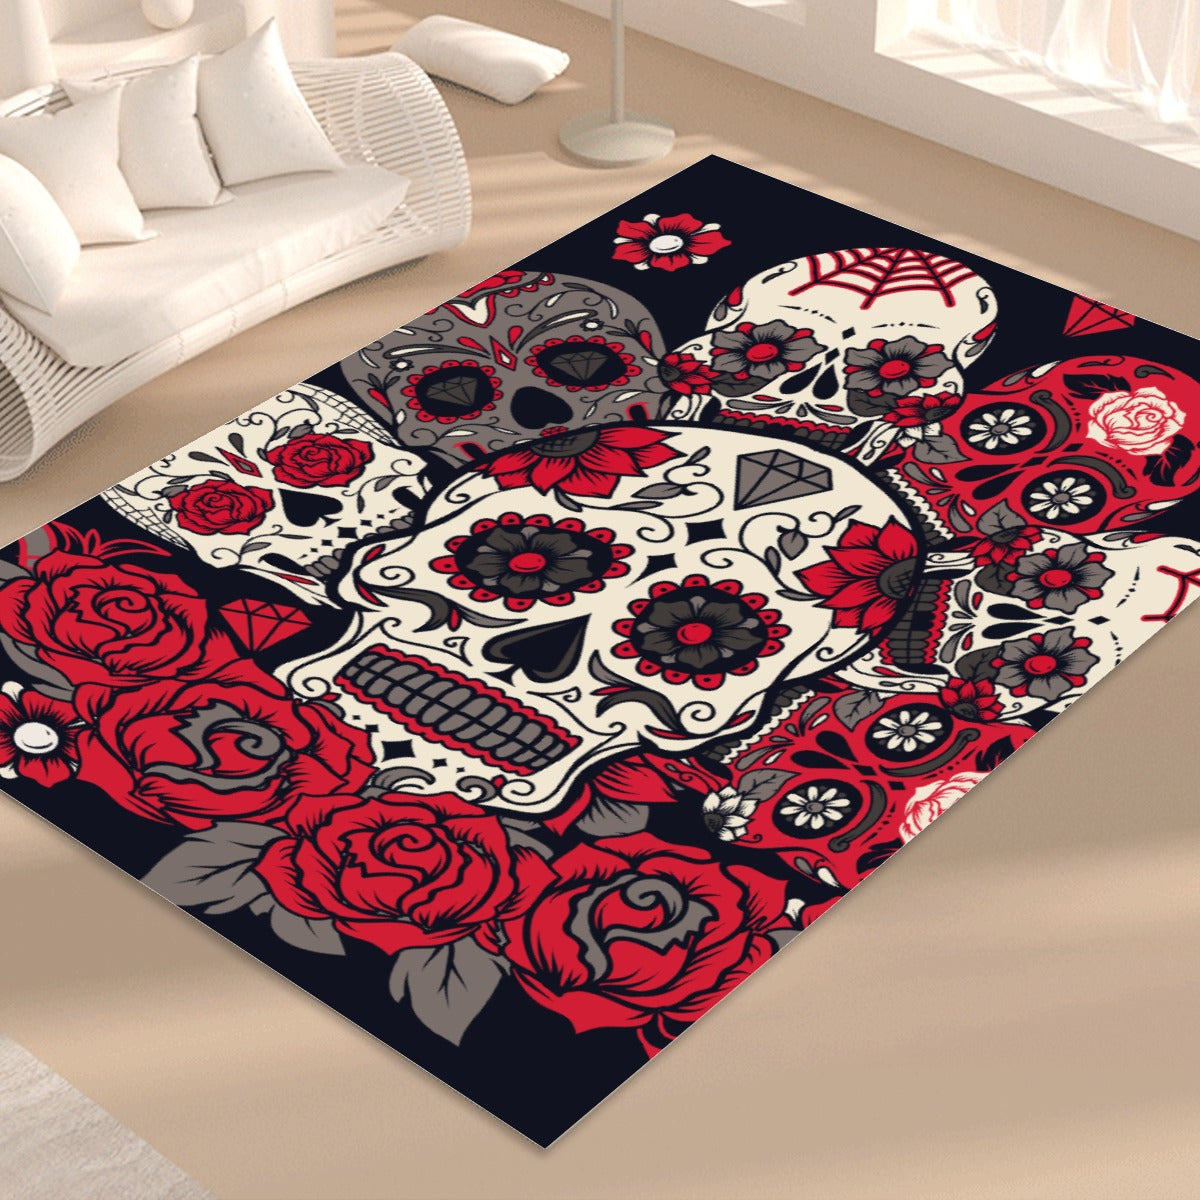 Sugar skull floral Foldable Rectangular Floor Mat